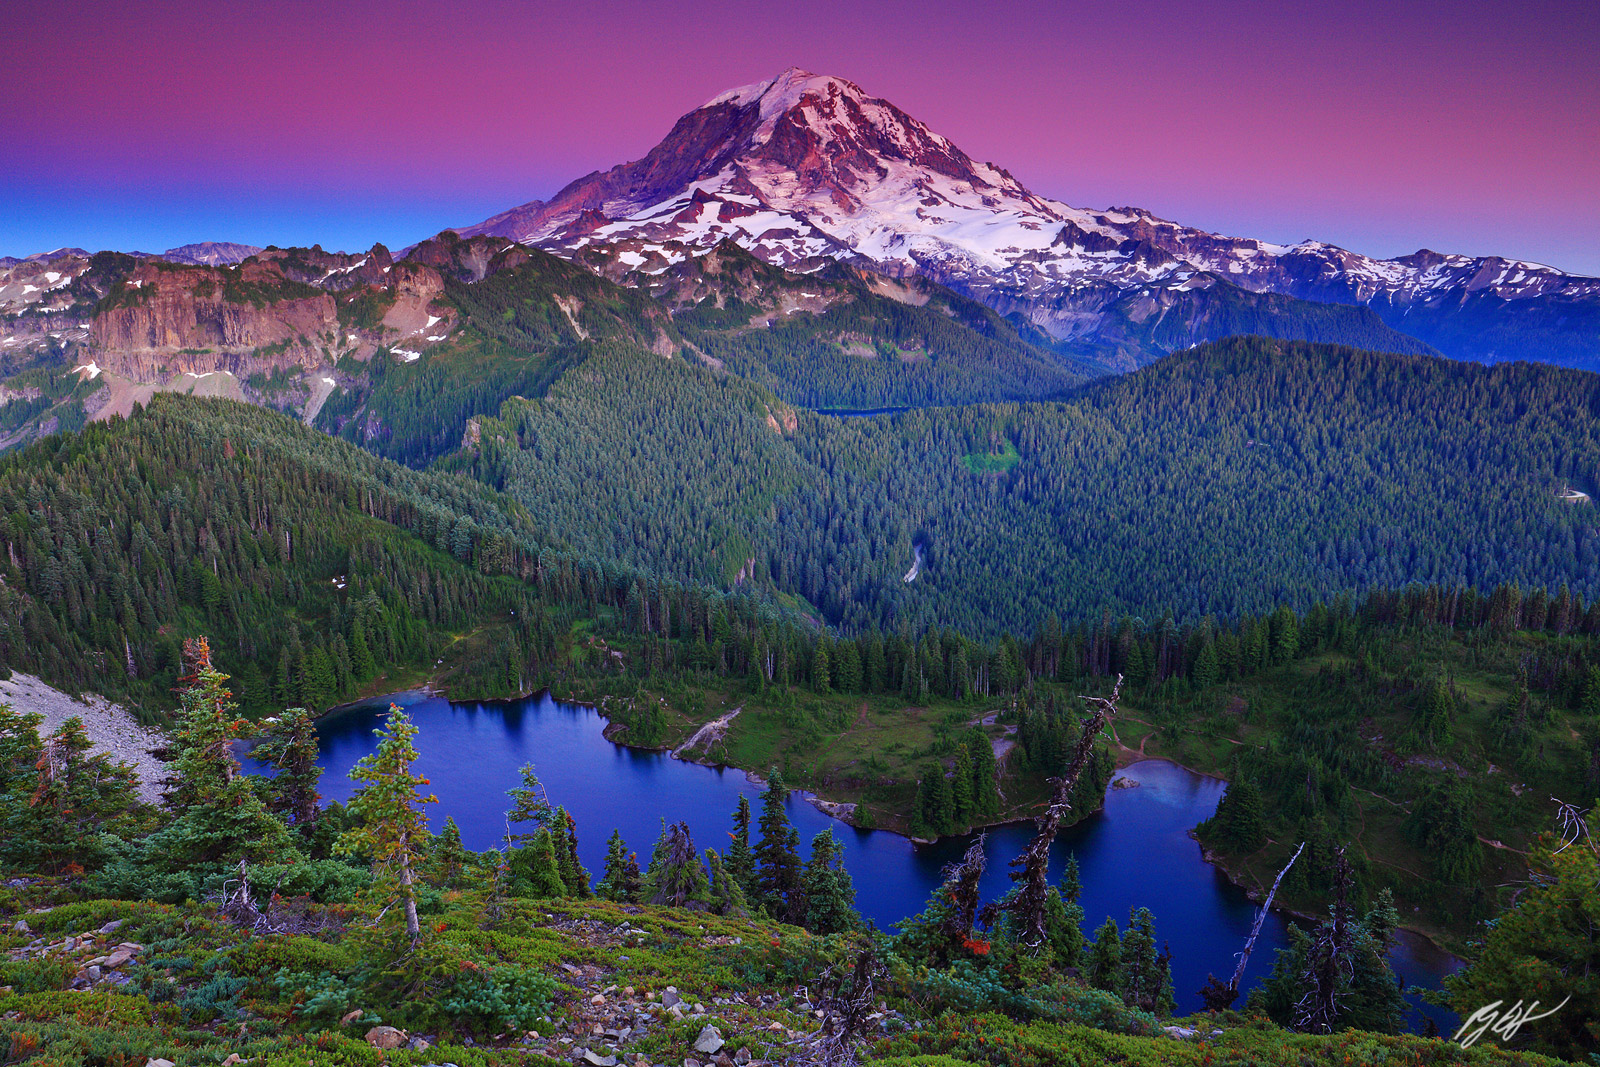 Sunset Alpenglow Mt Rainier and Eunice Lake from Tolmie Peak in Mt Rainier National Park in Washington